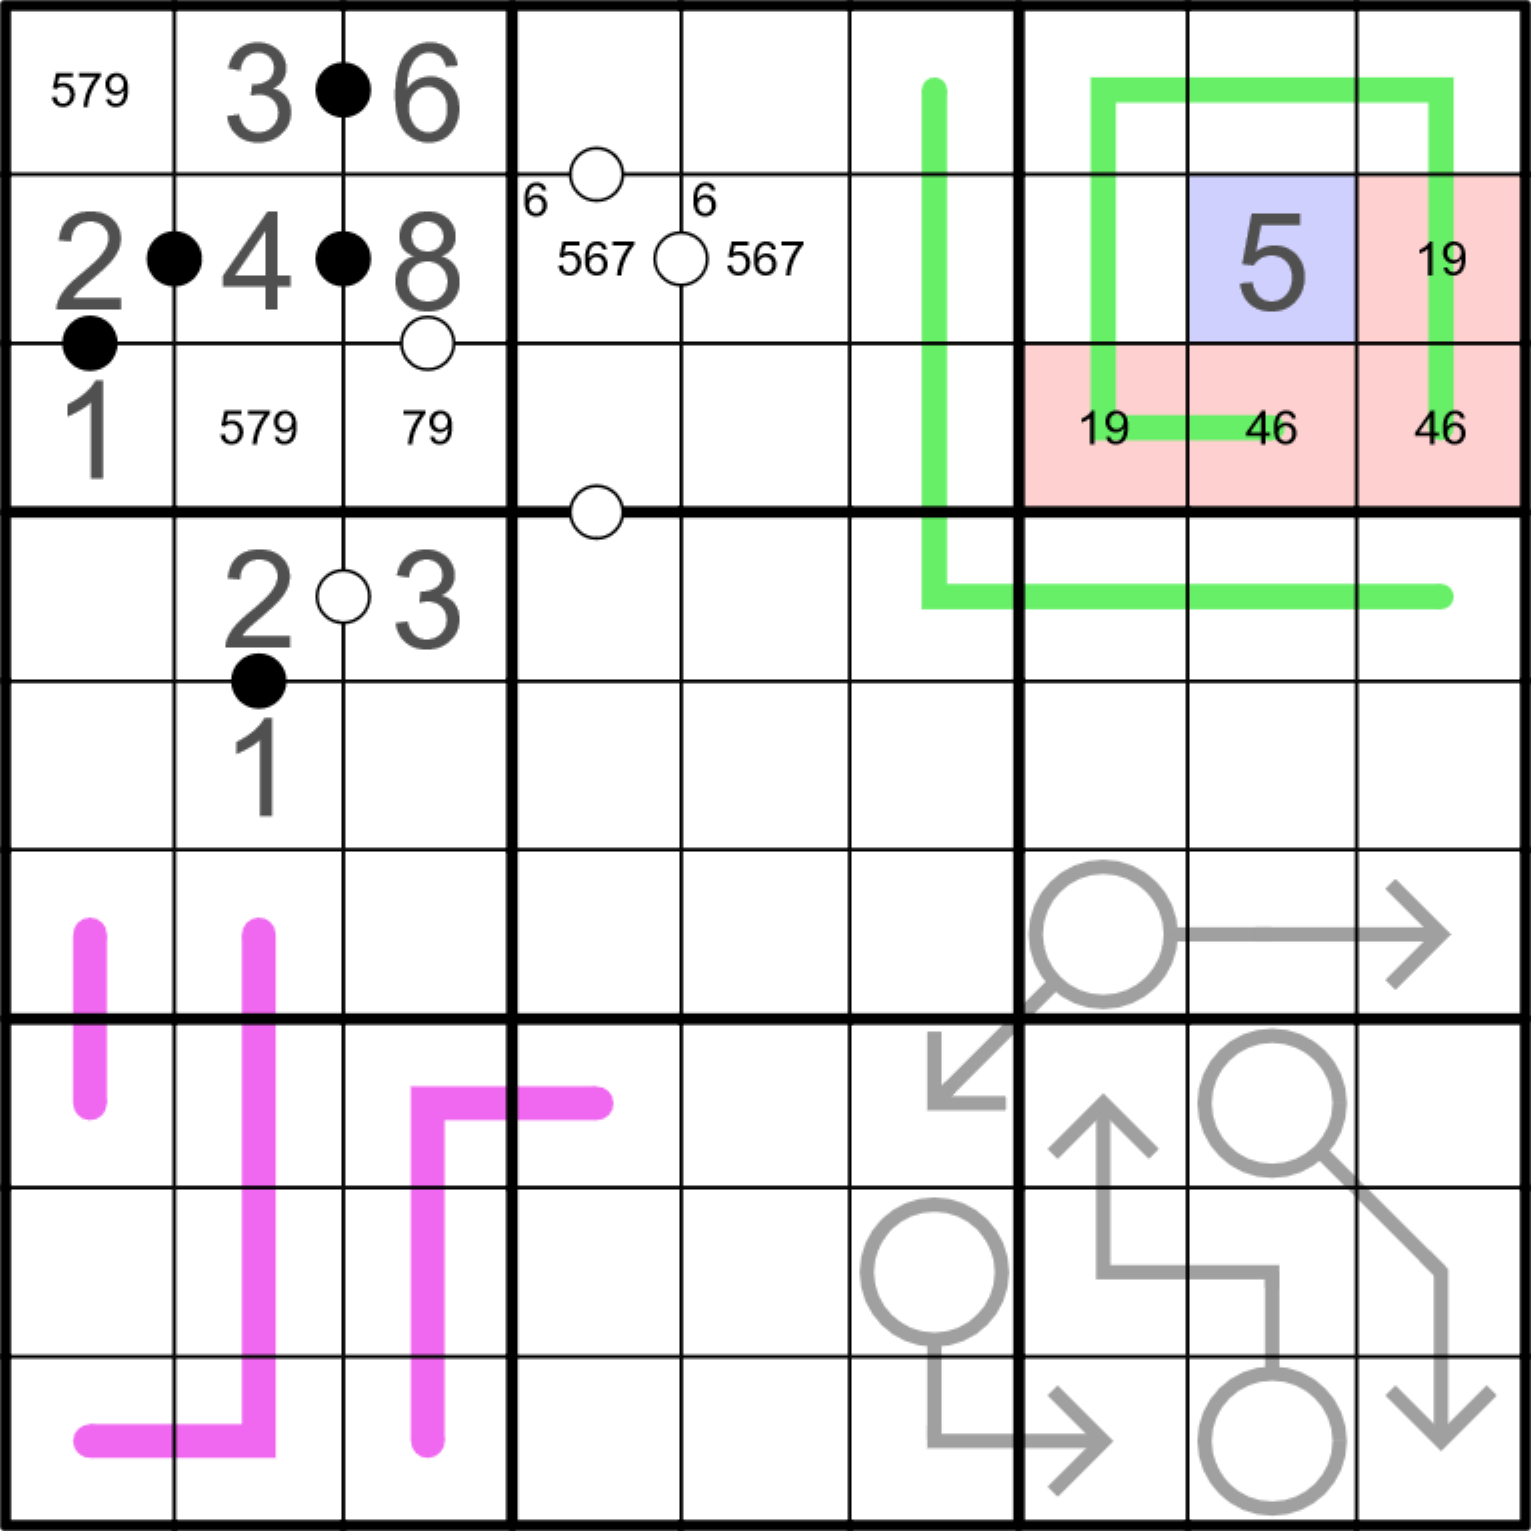 Variations of sudoku puzzles.